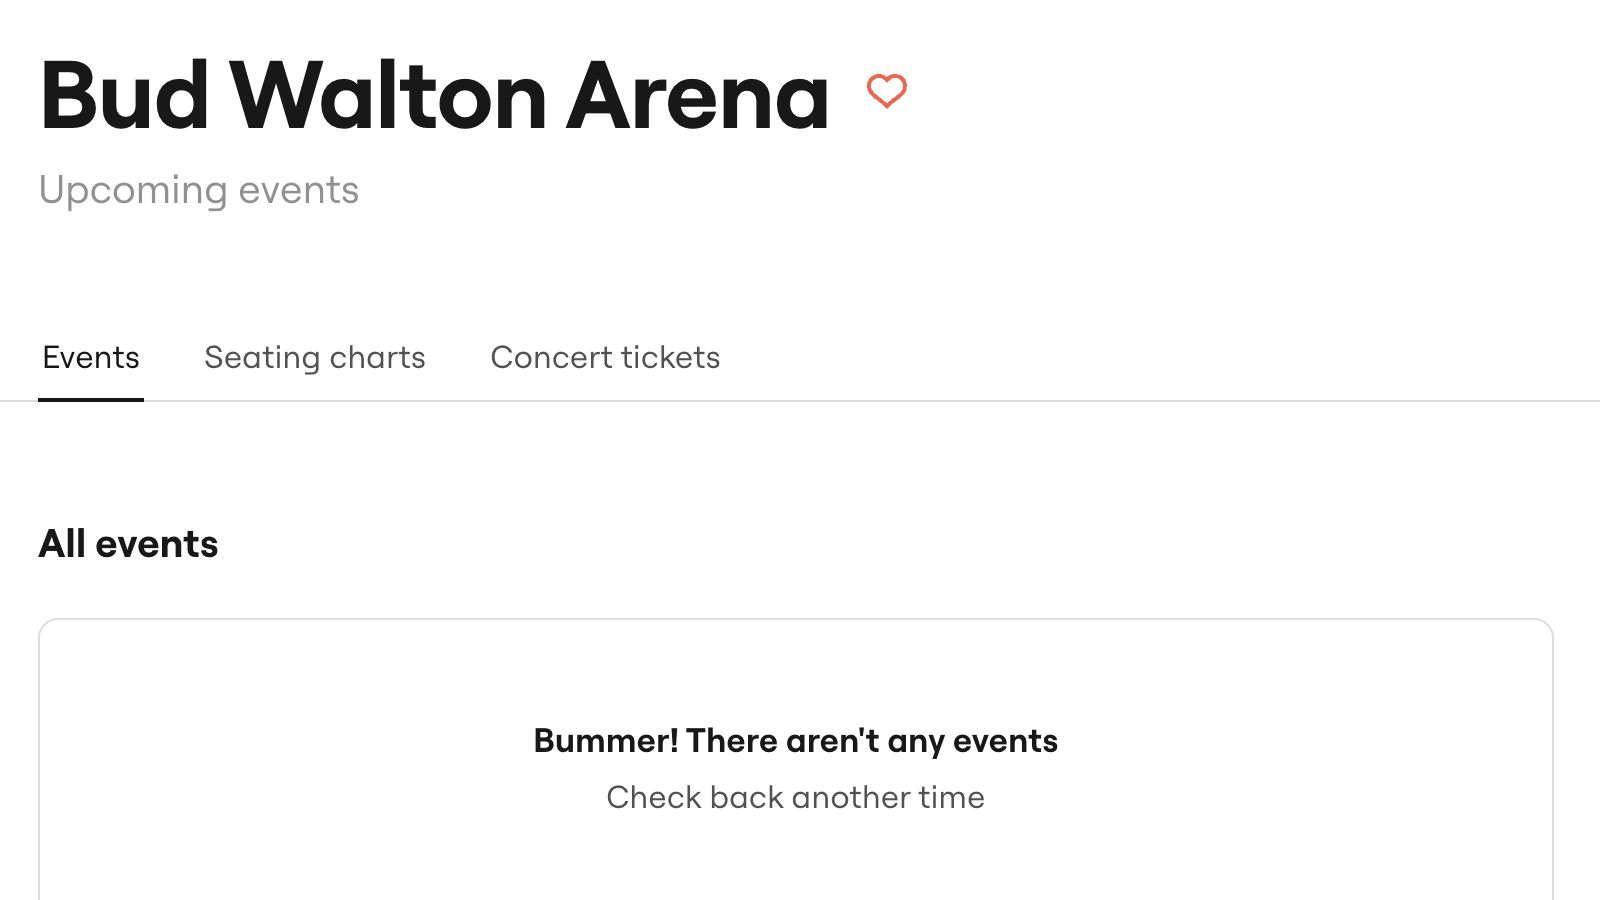 An image showing no upcoming events at Bud Walton Arena.